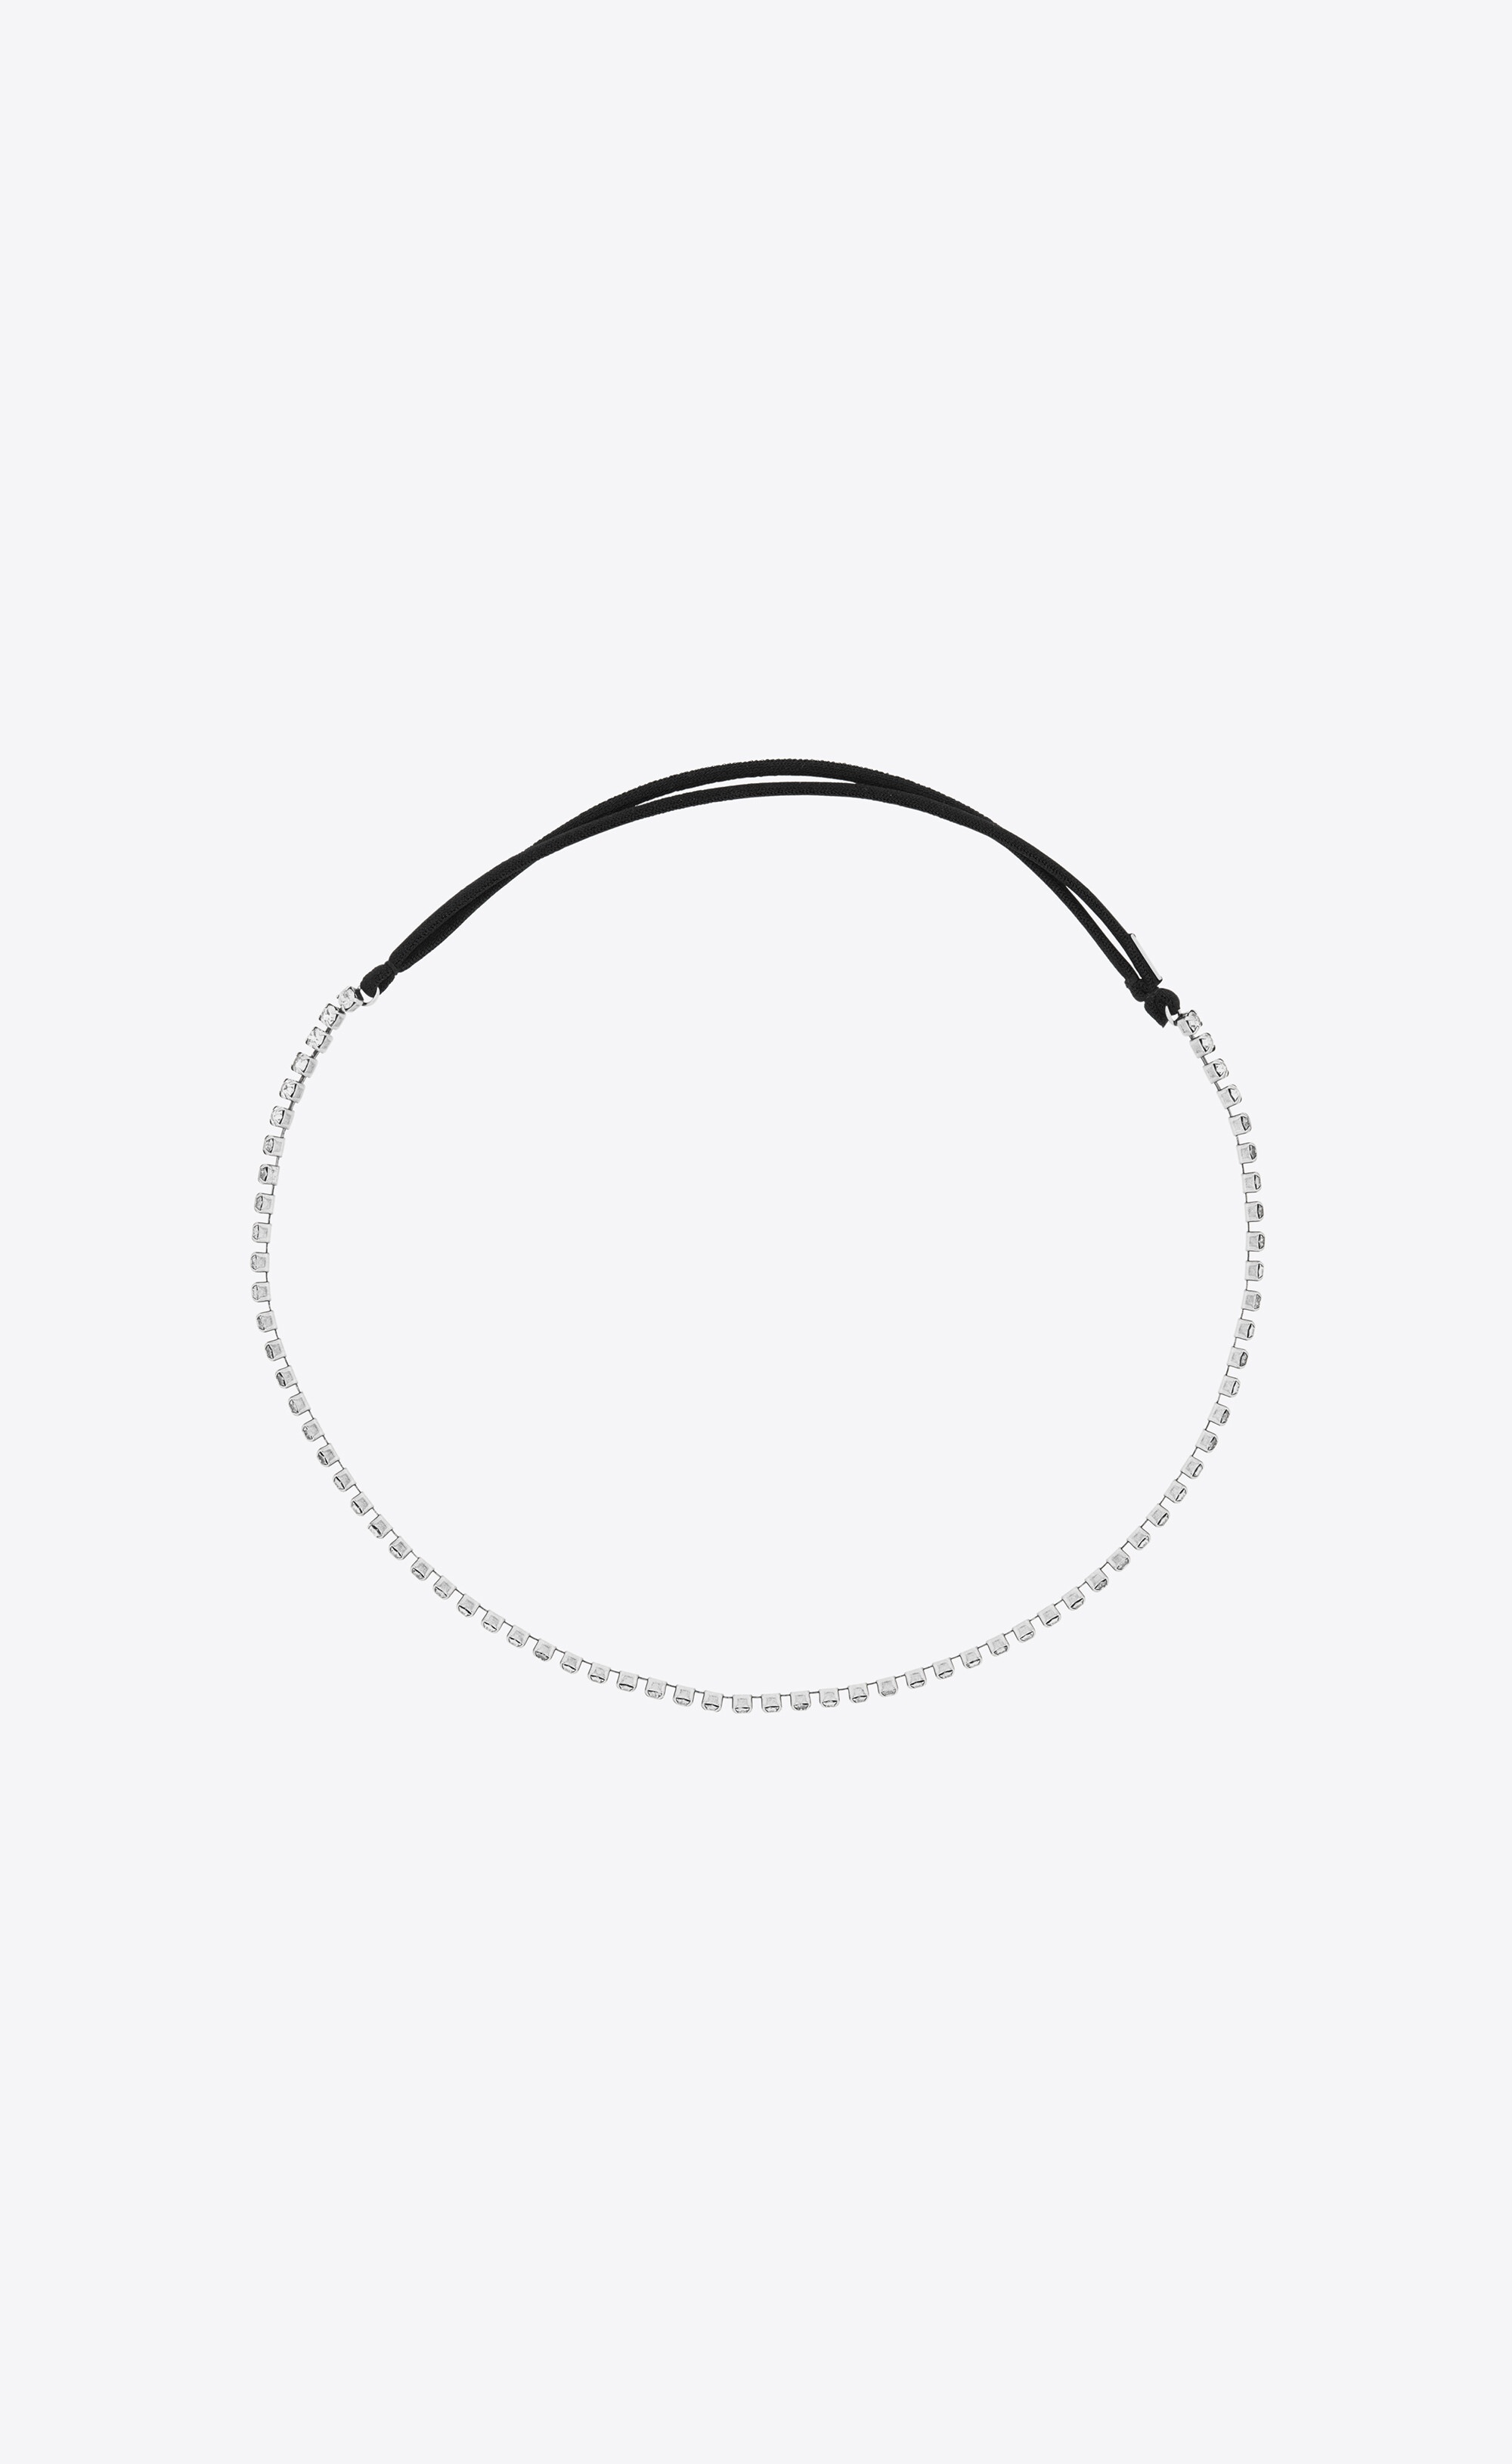 rhinestone chain headband in metal and elastic - 3